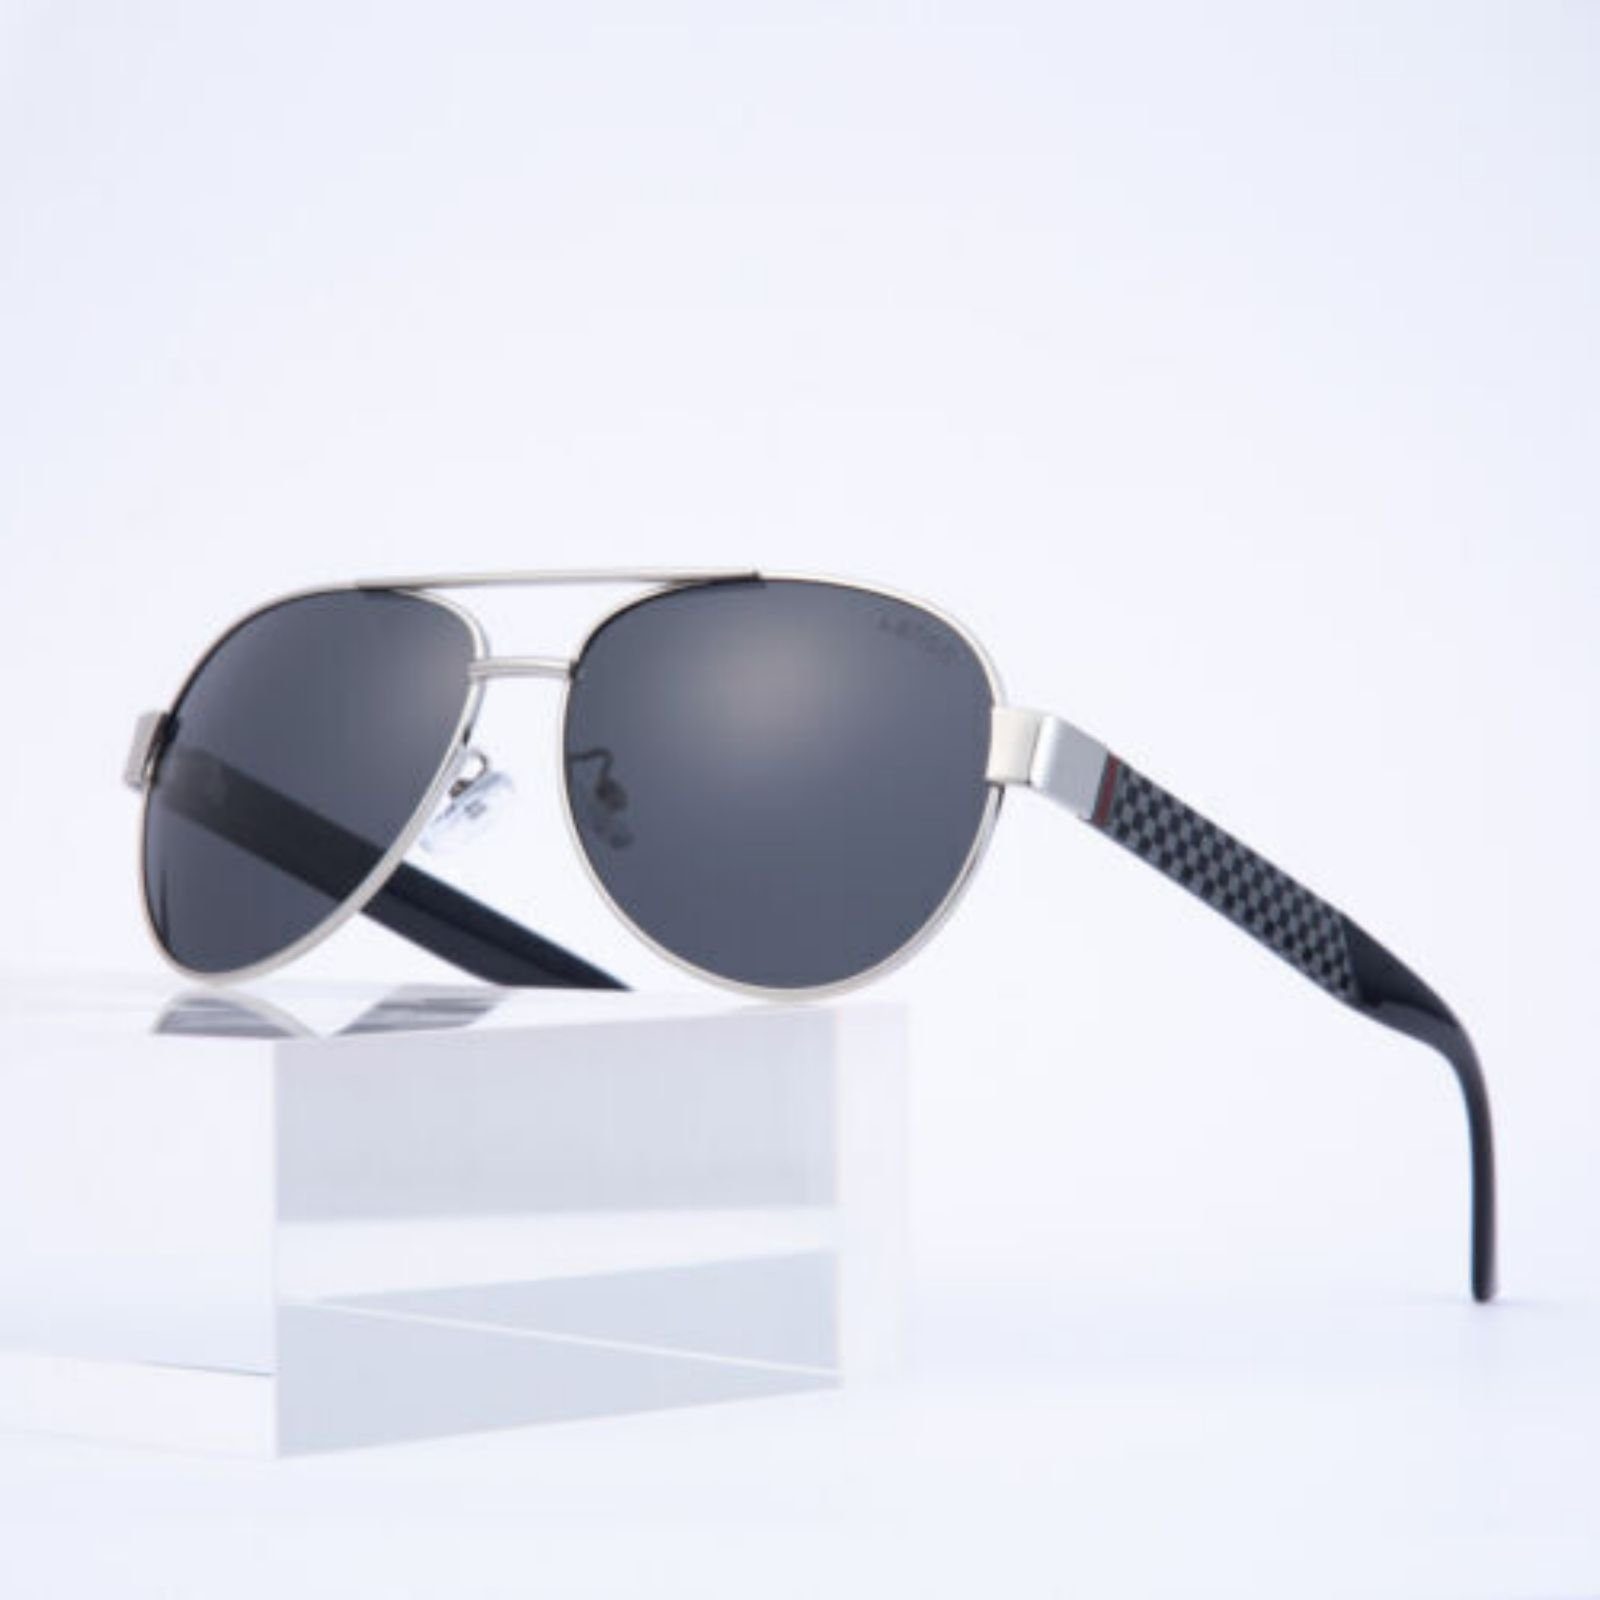 Lamon Sonnenbrille Herren Aluminium Magnesium Polarisiert Sonnenbrille Sportarten UV400 Silberner Rahmen, graue Linse